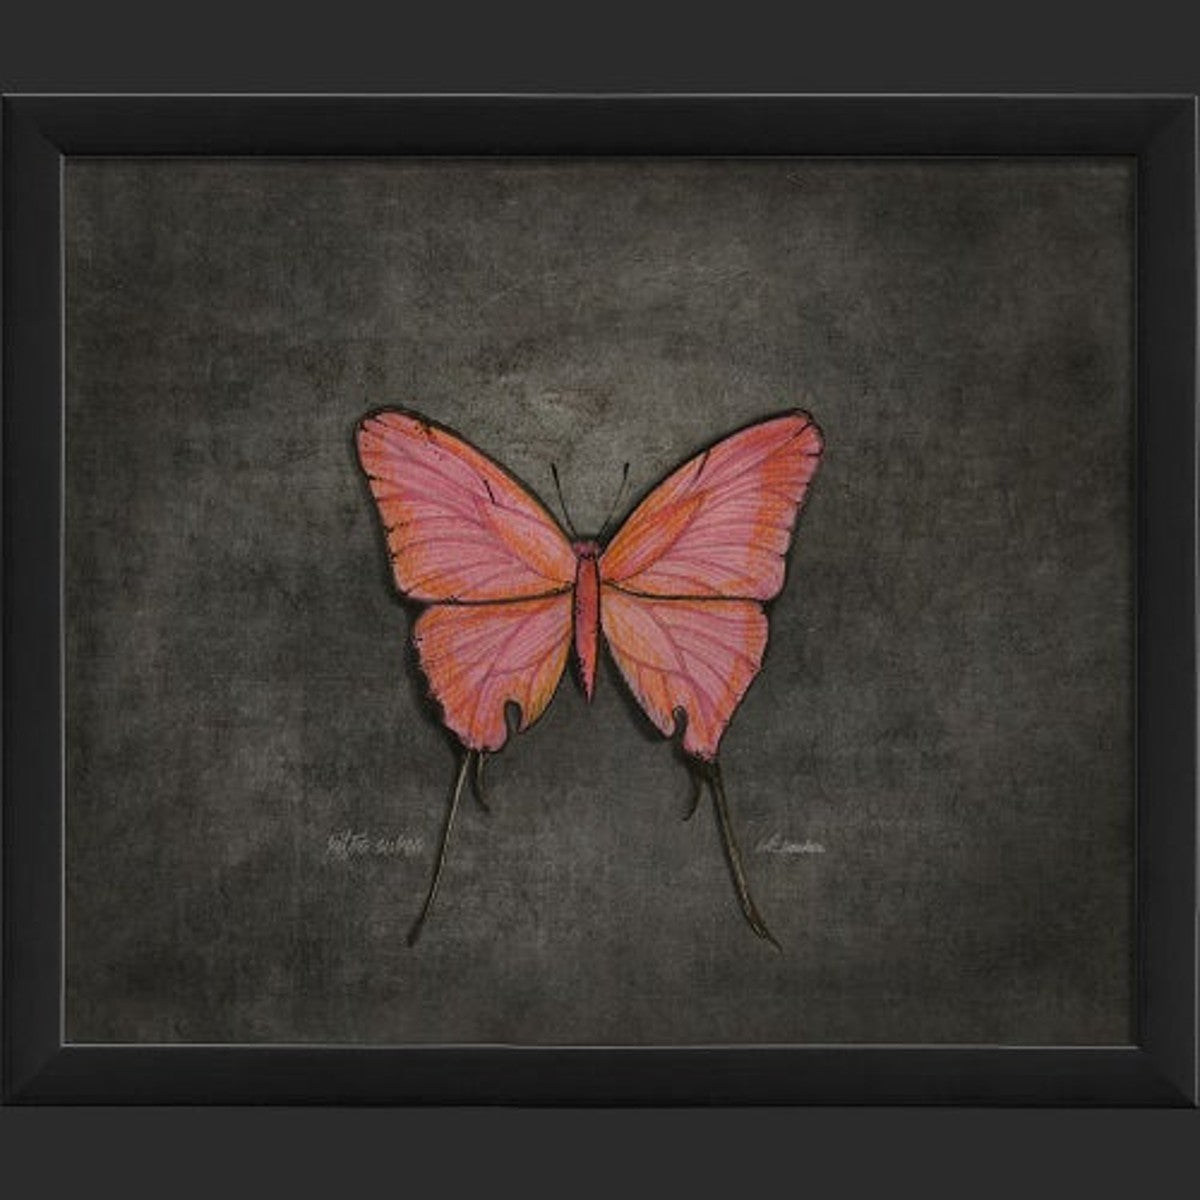 Framed Butterfly Print - Rita Aurea